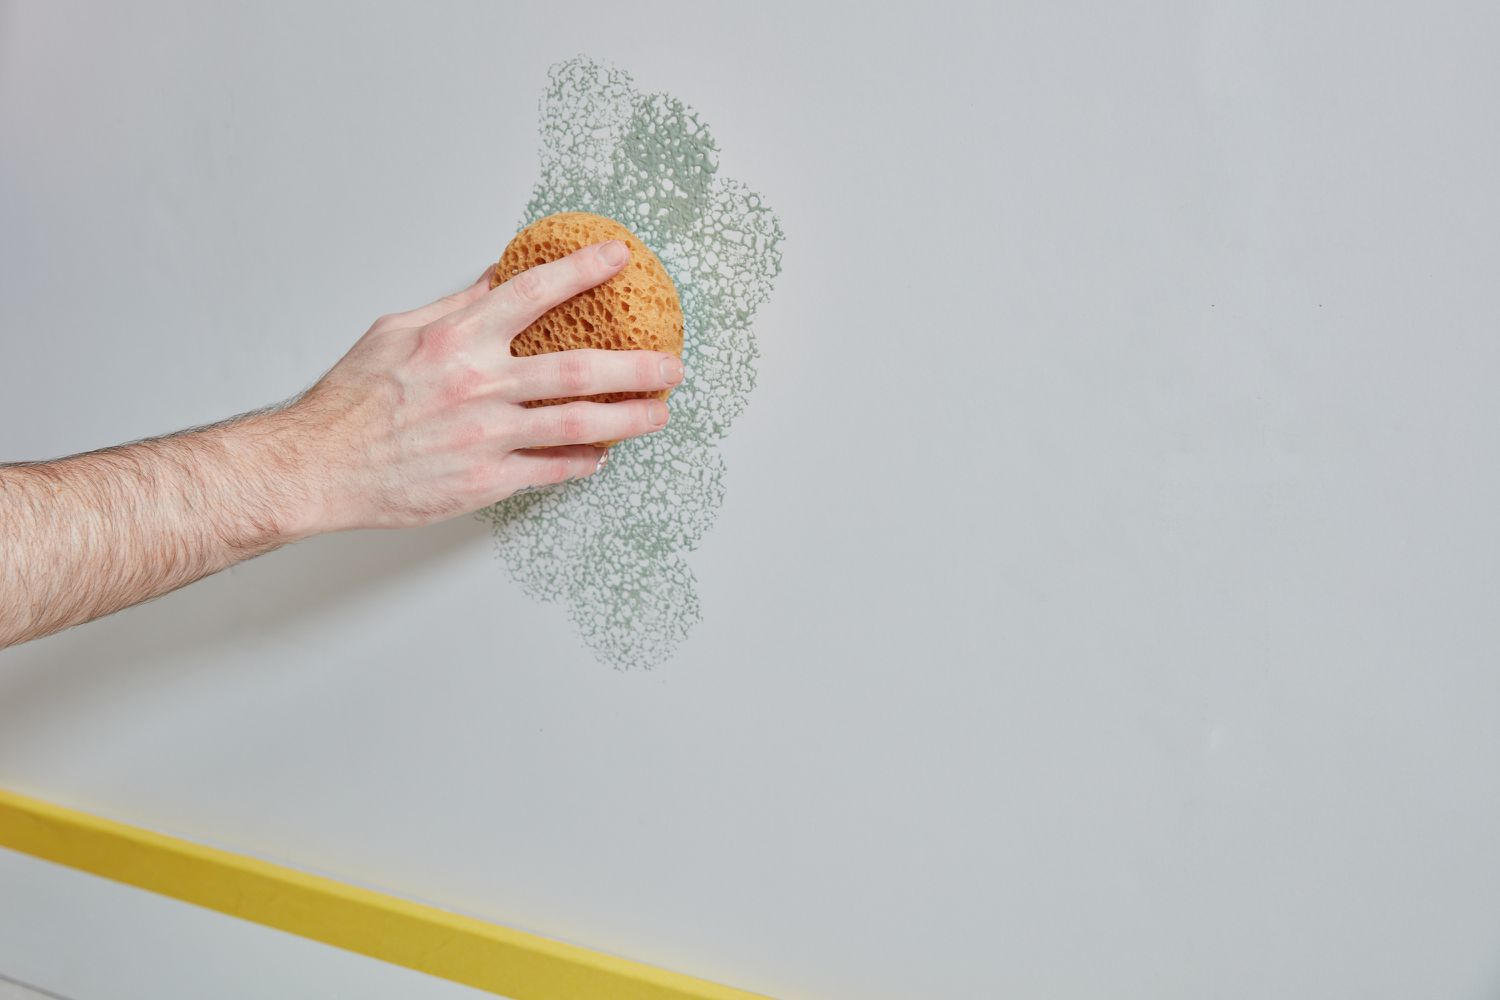 Esponja pressionando levemente a tinta verde nas paredes